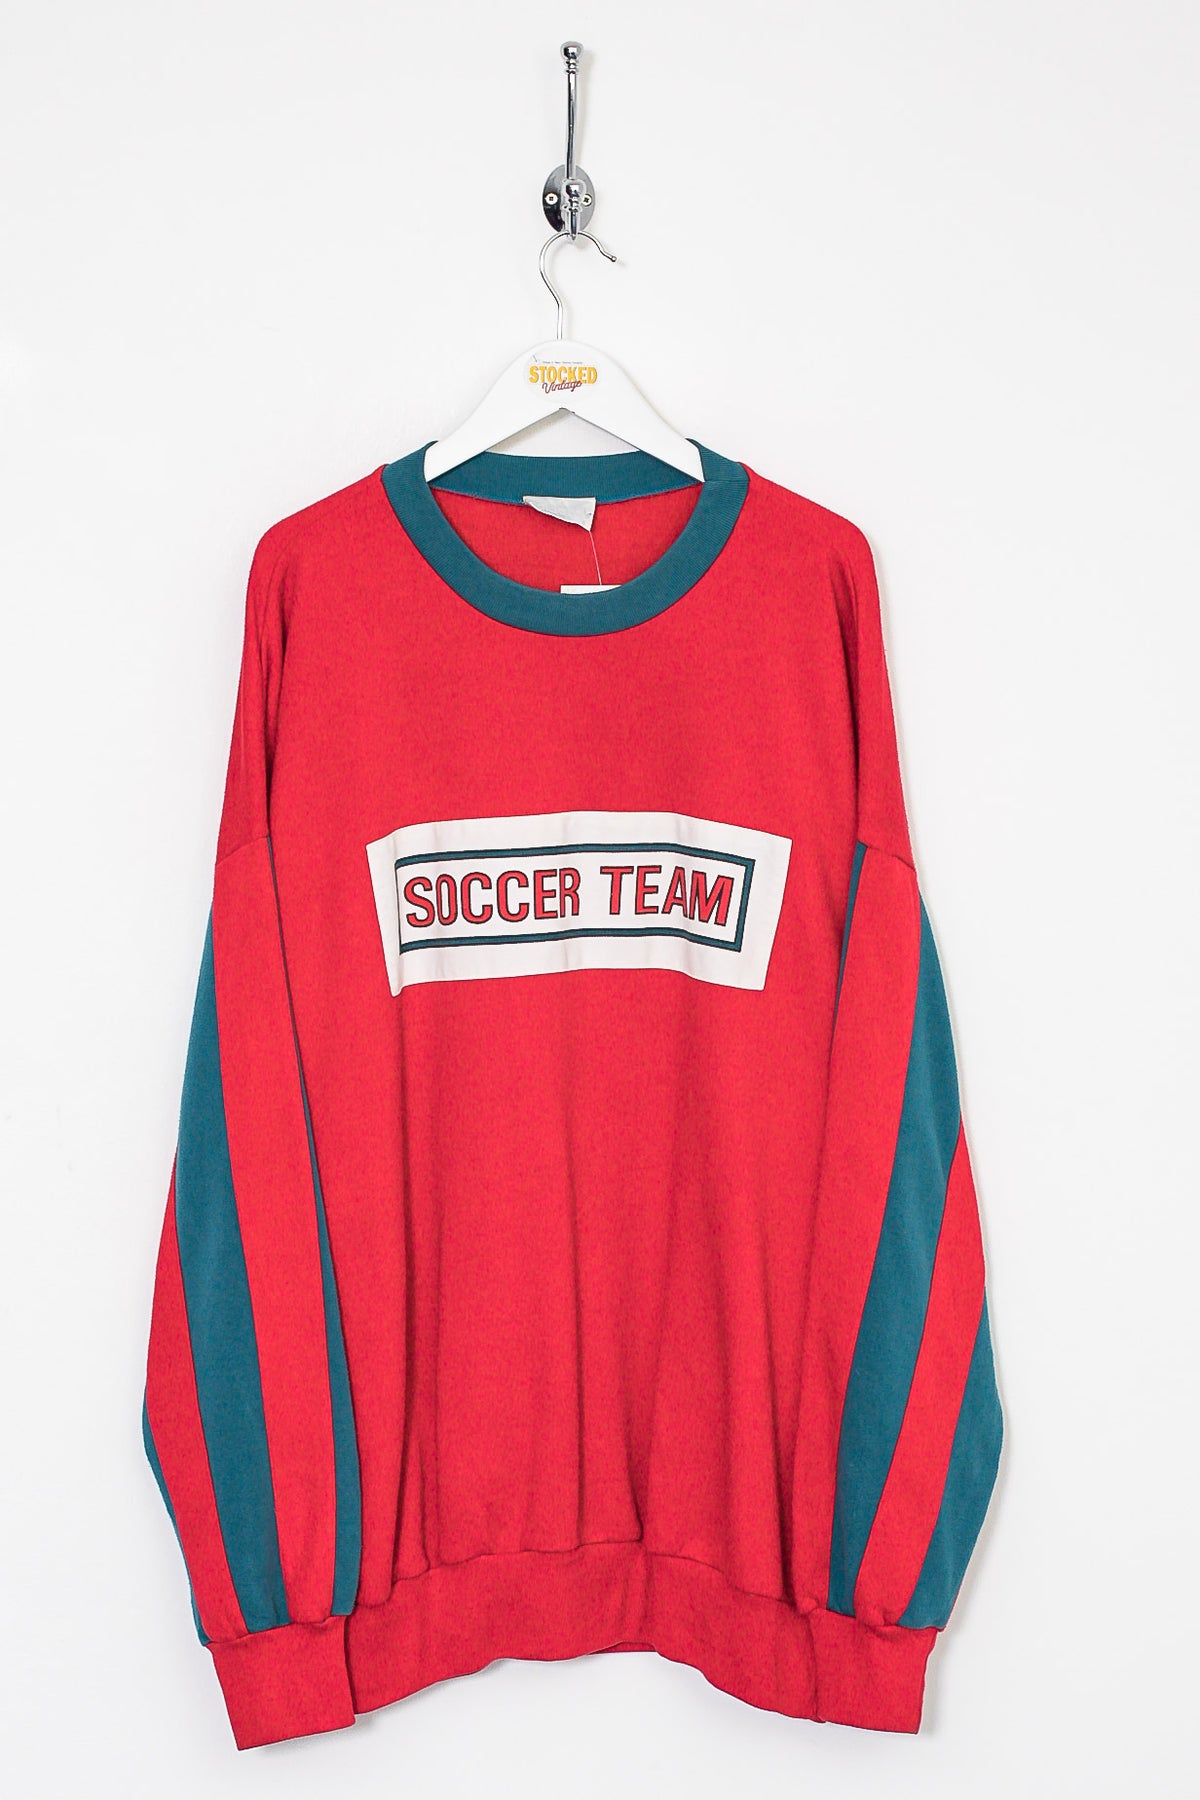 90s Adidas Soccer Team Sweatshirt (XL)